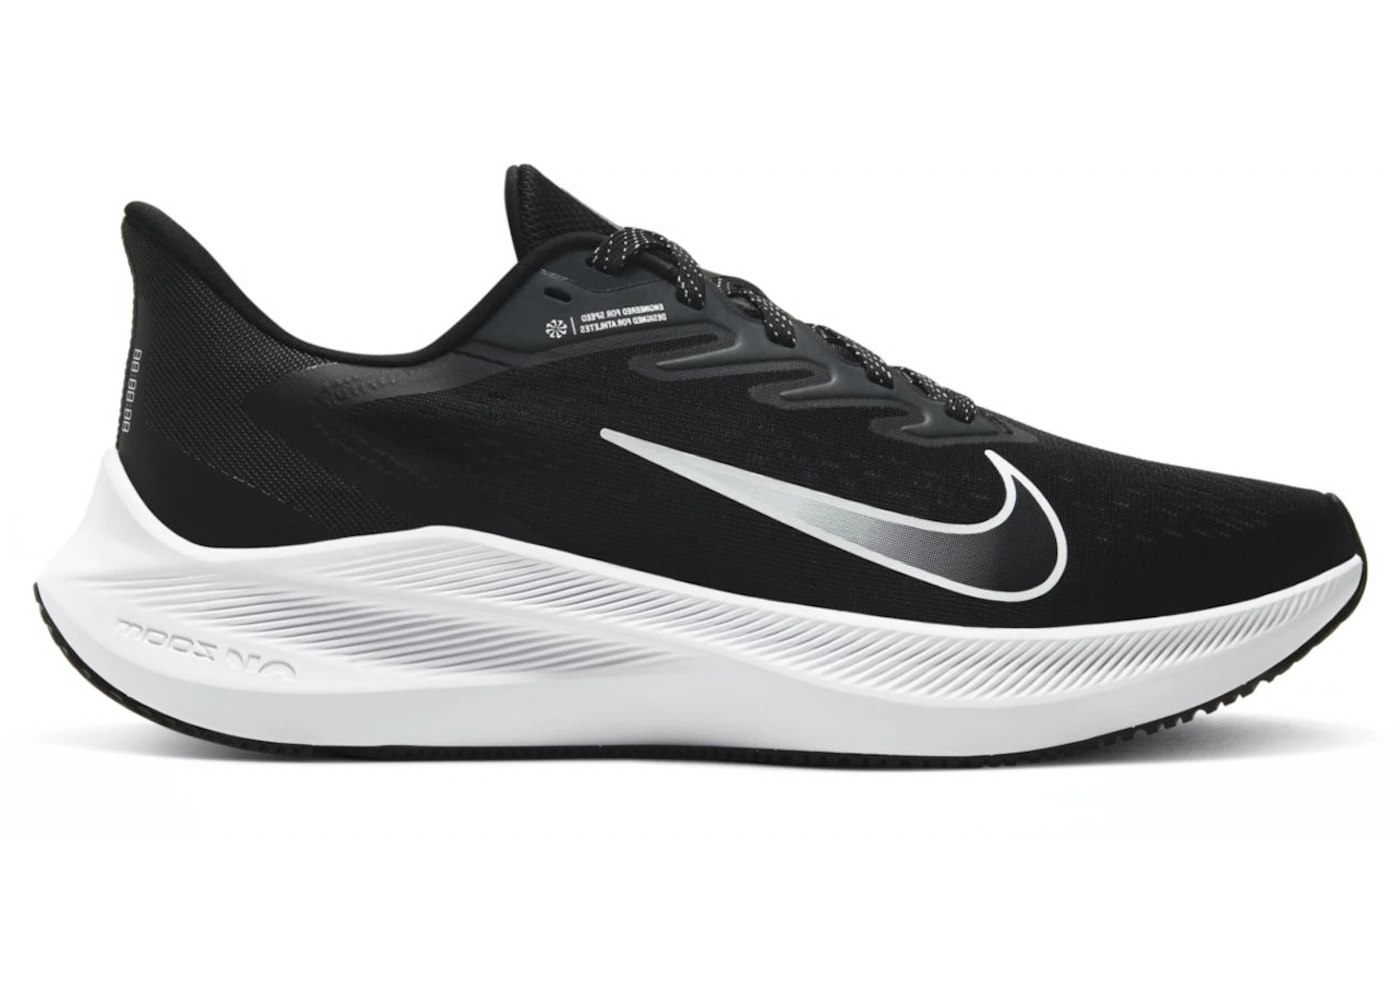 Nike Zoom Winflo 7 Black Anthracite (Women's) - CJ0302-005 - US